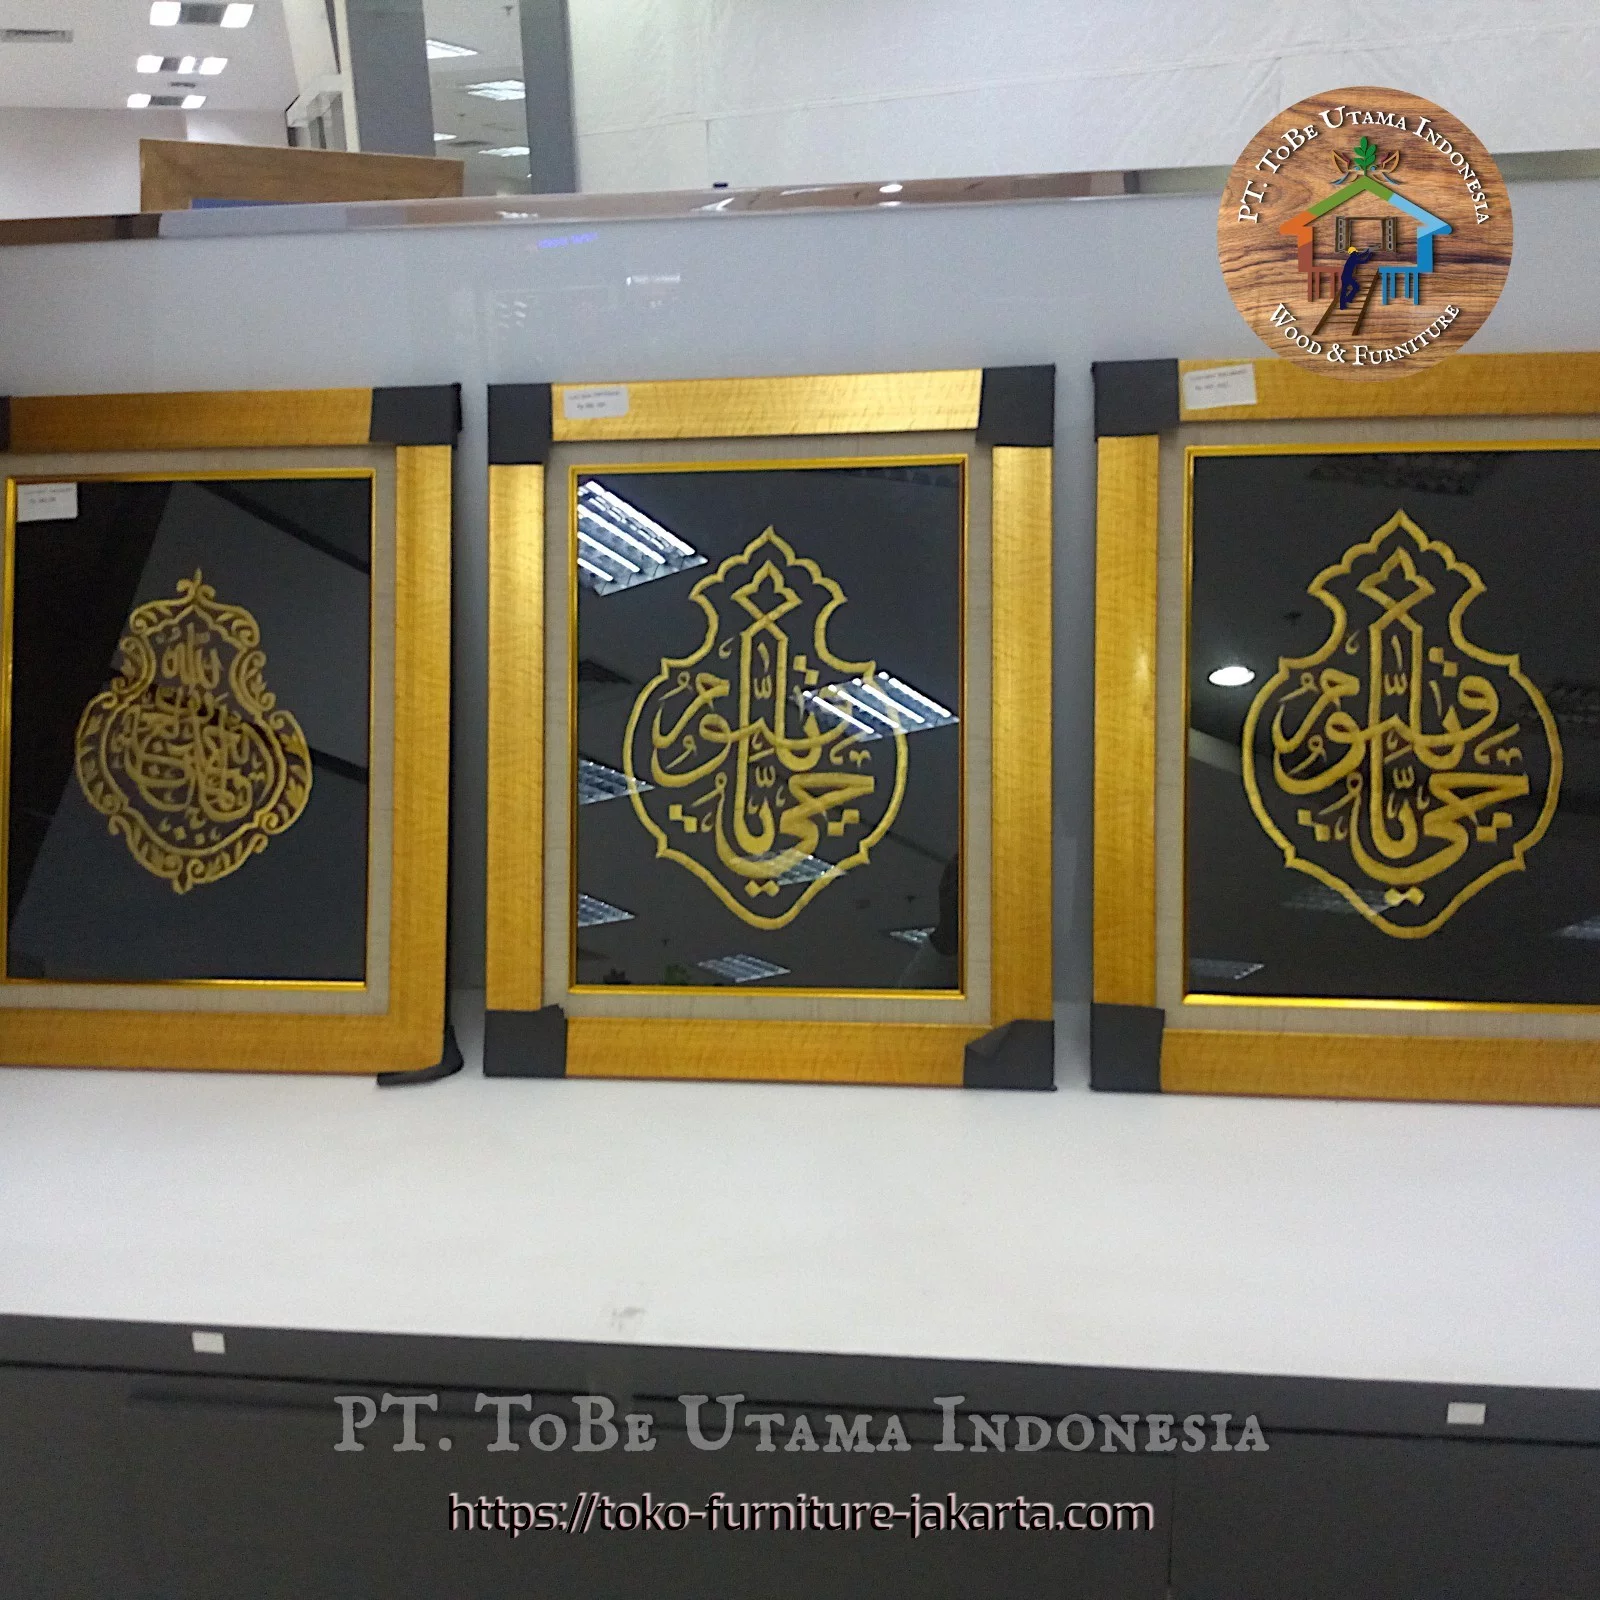 Living Room: Calligraphy Al-Quran (image 1 of 2).